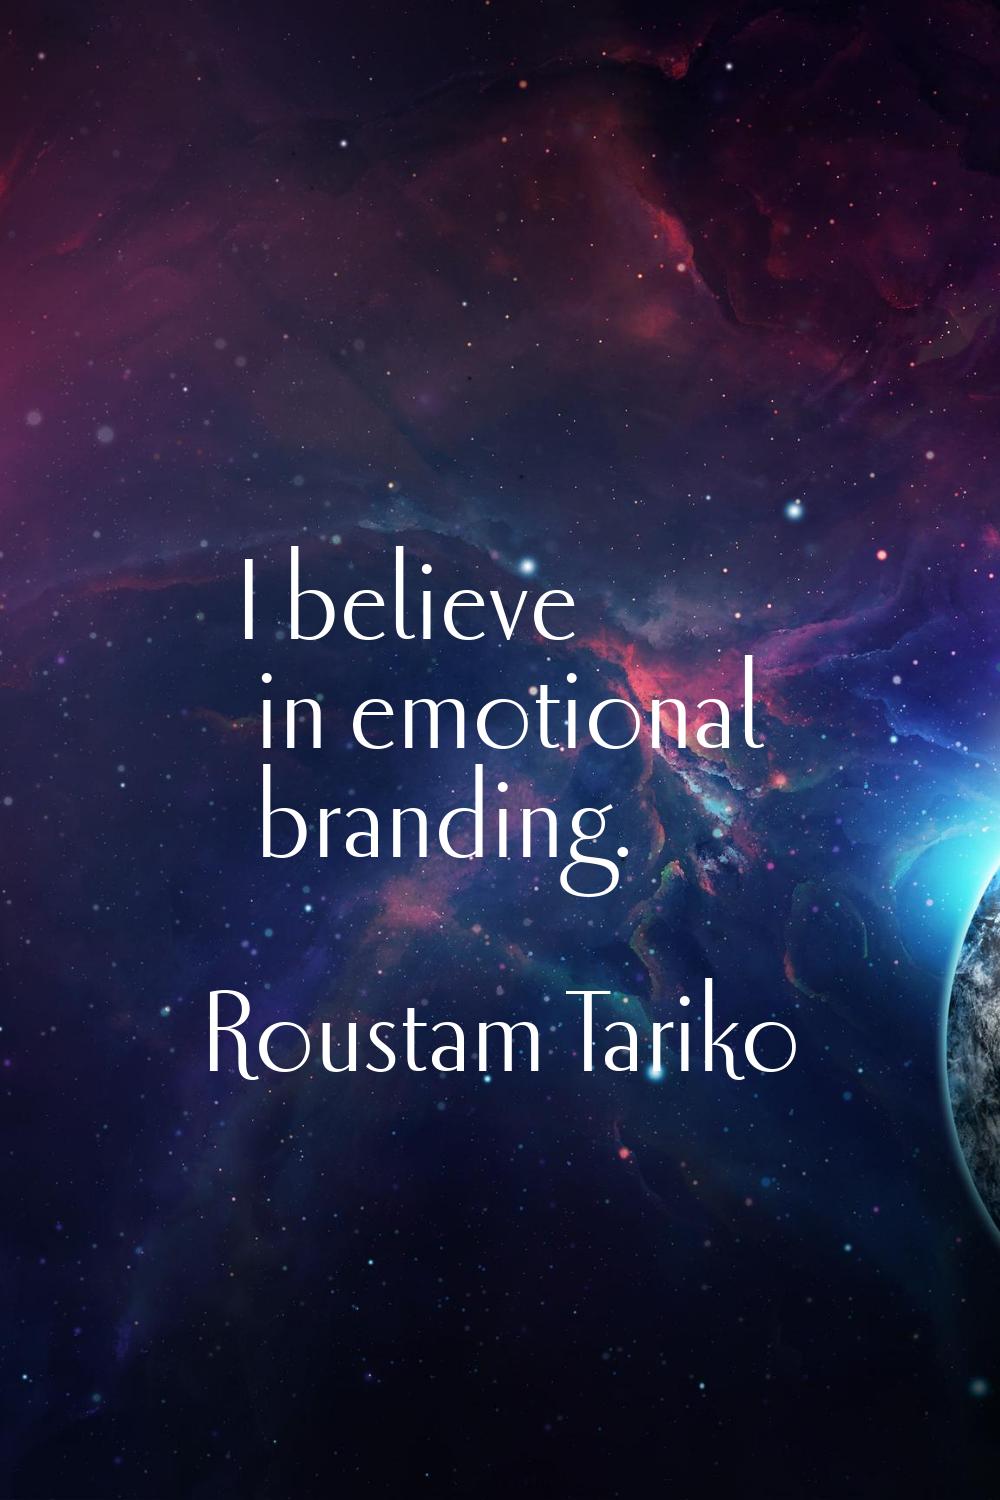 I believe in emotional branding.